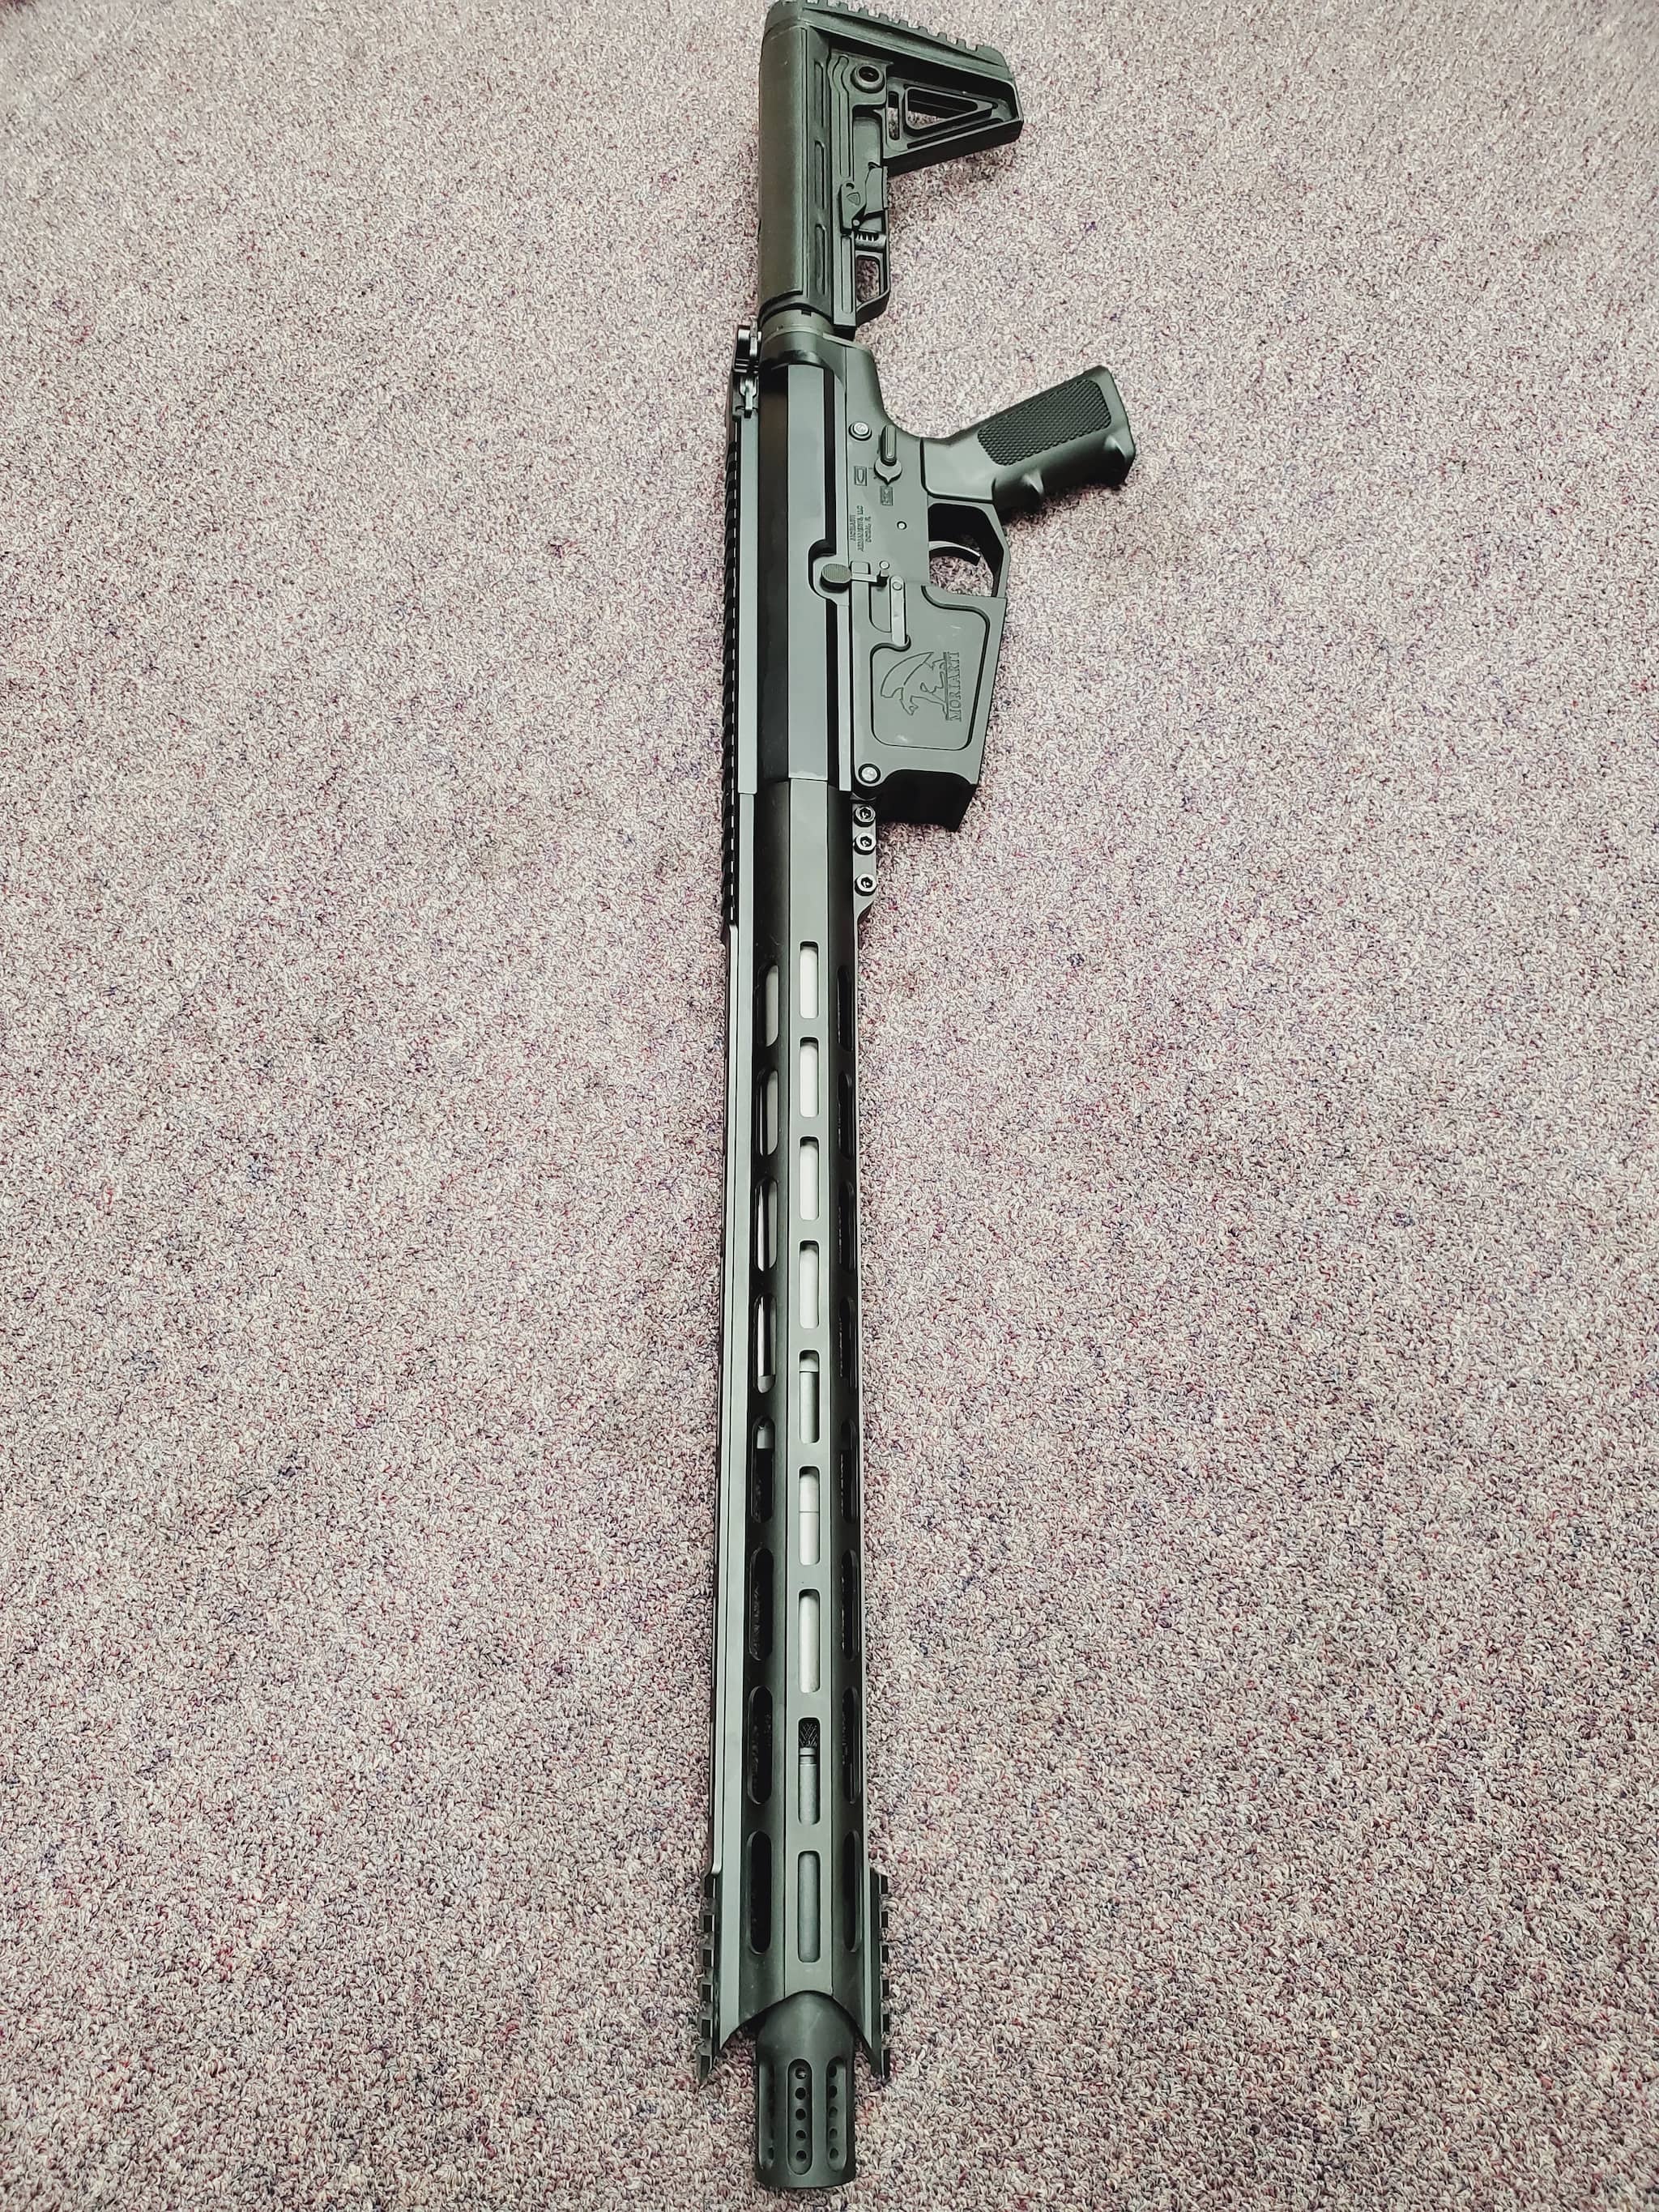 Image of Kahr Arms Pistol CW 380acp 2in barrel black- - -CW380 Display Model